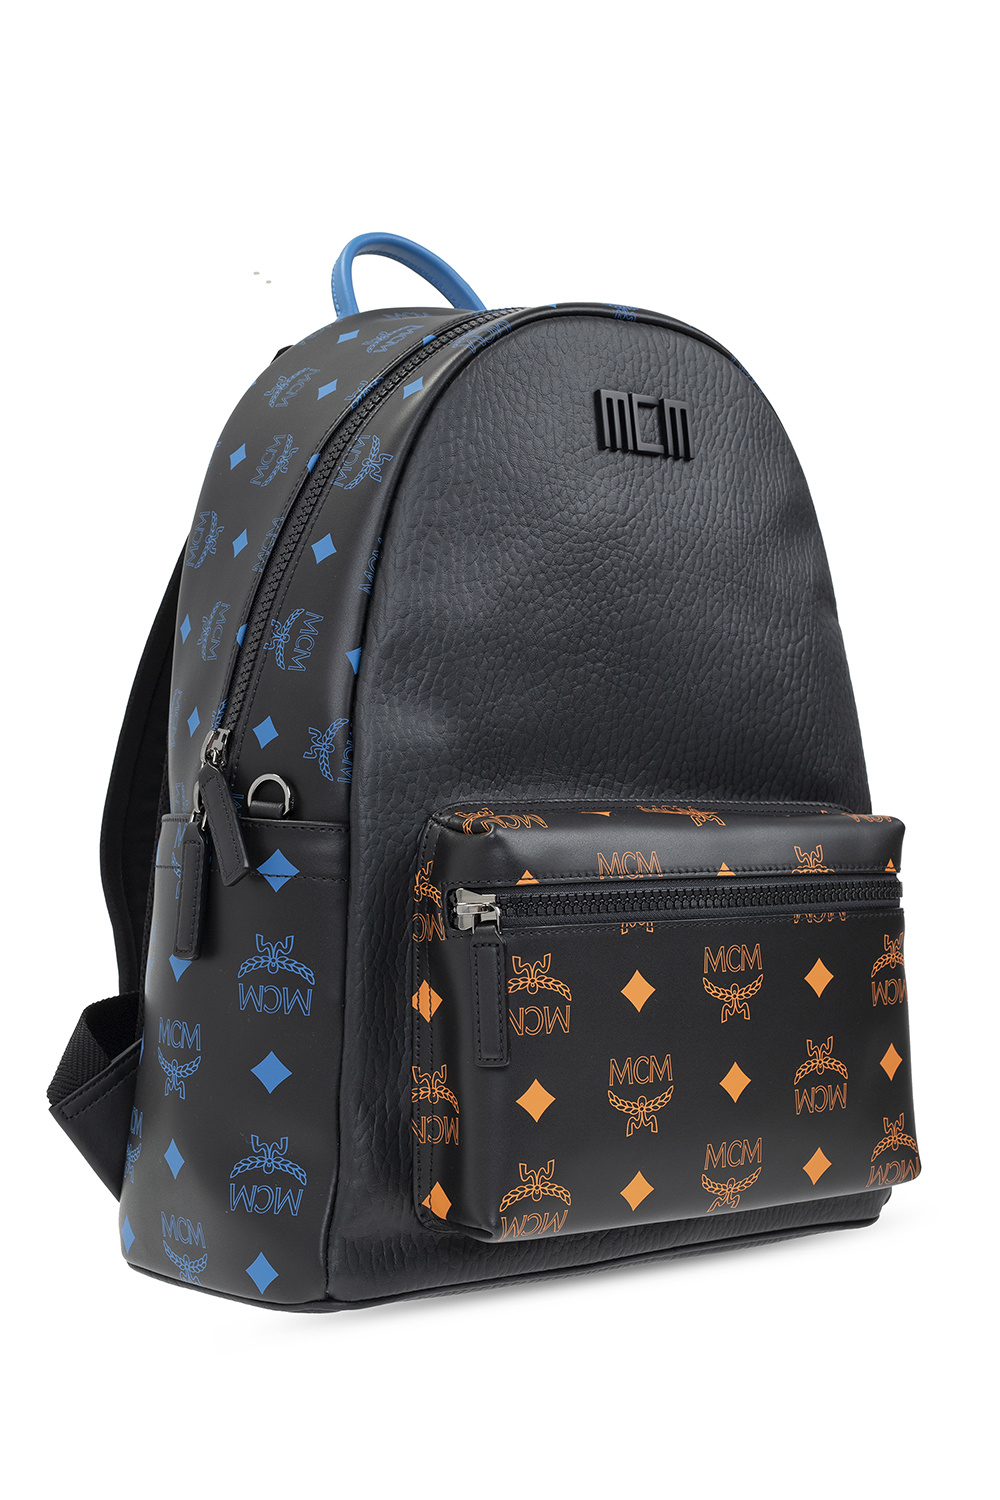 MCM Men's Backpacks, Luxury Leather Backpacks